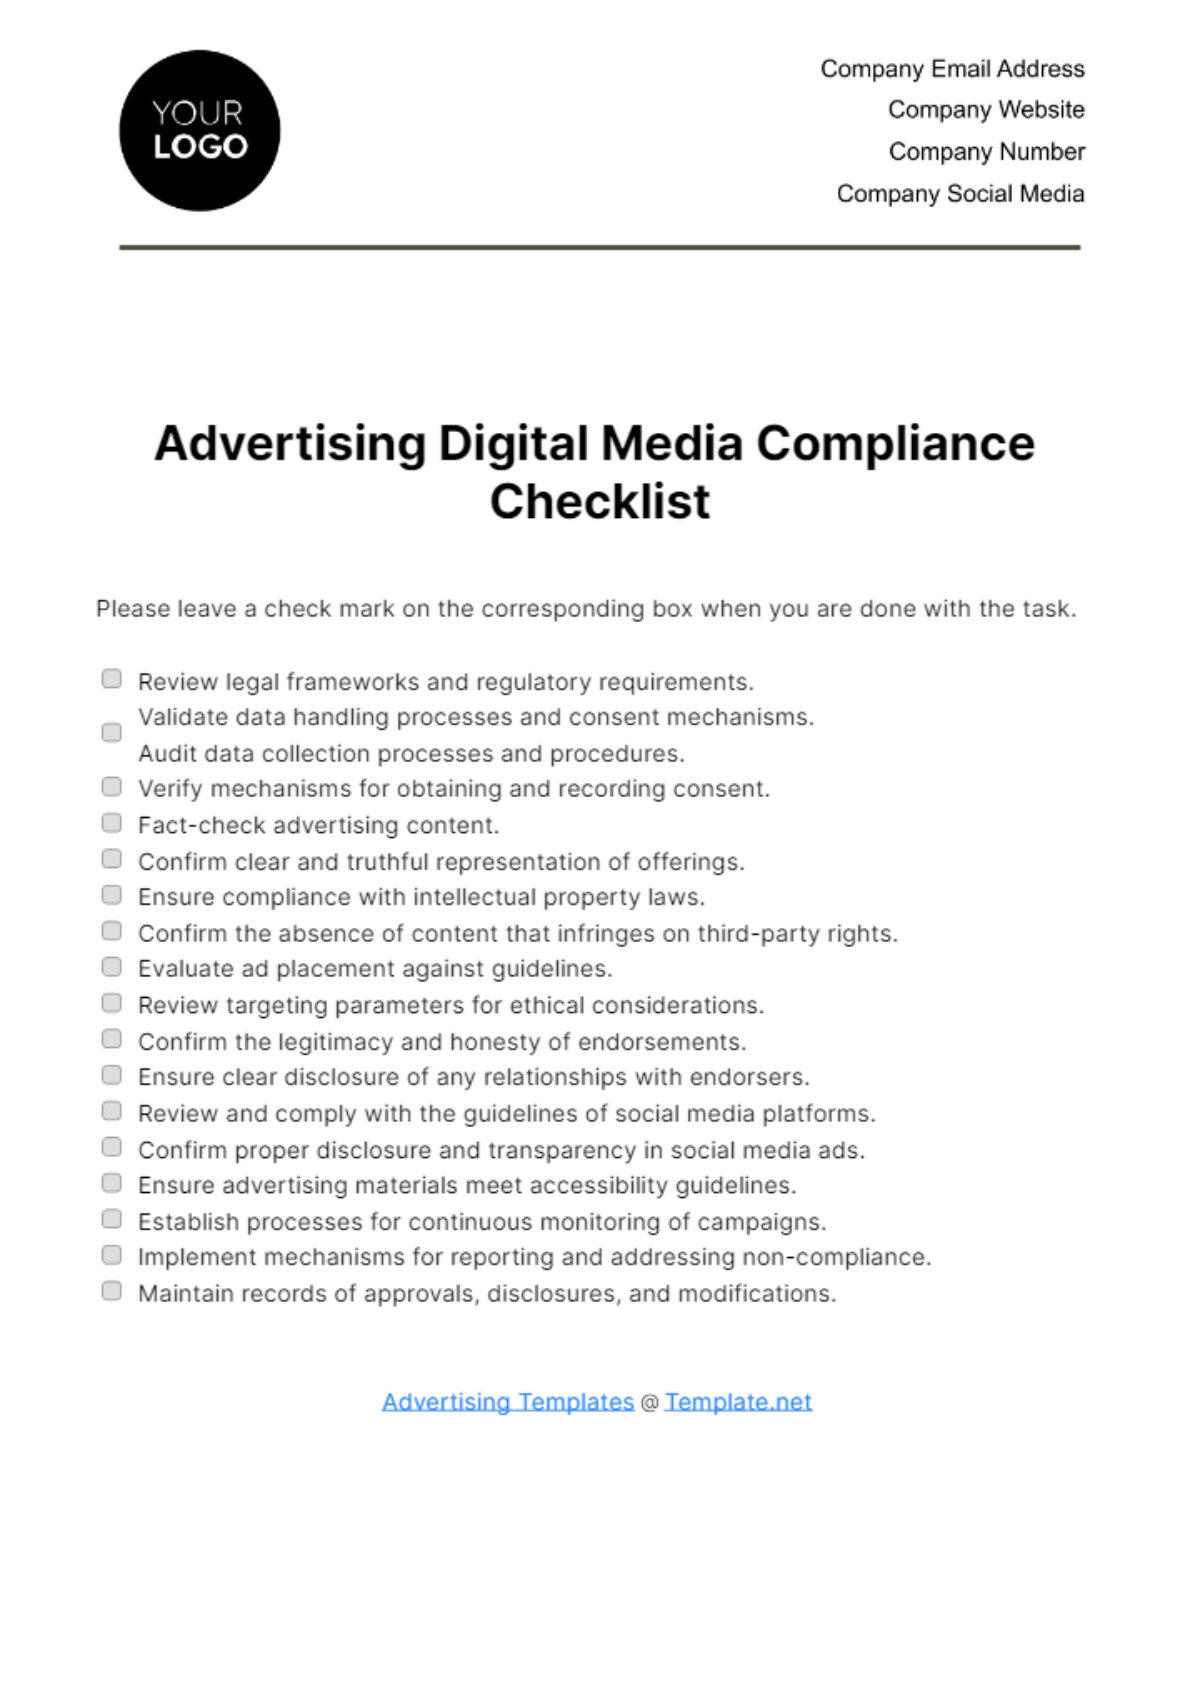 Advertising Digital Media Compliance Checklist Template